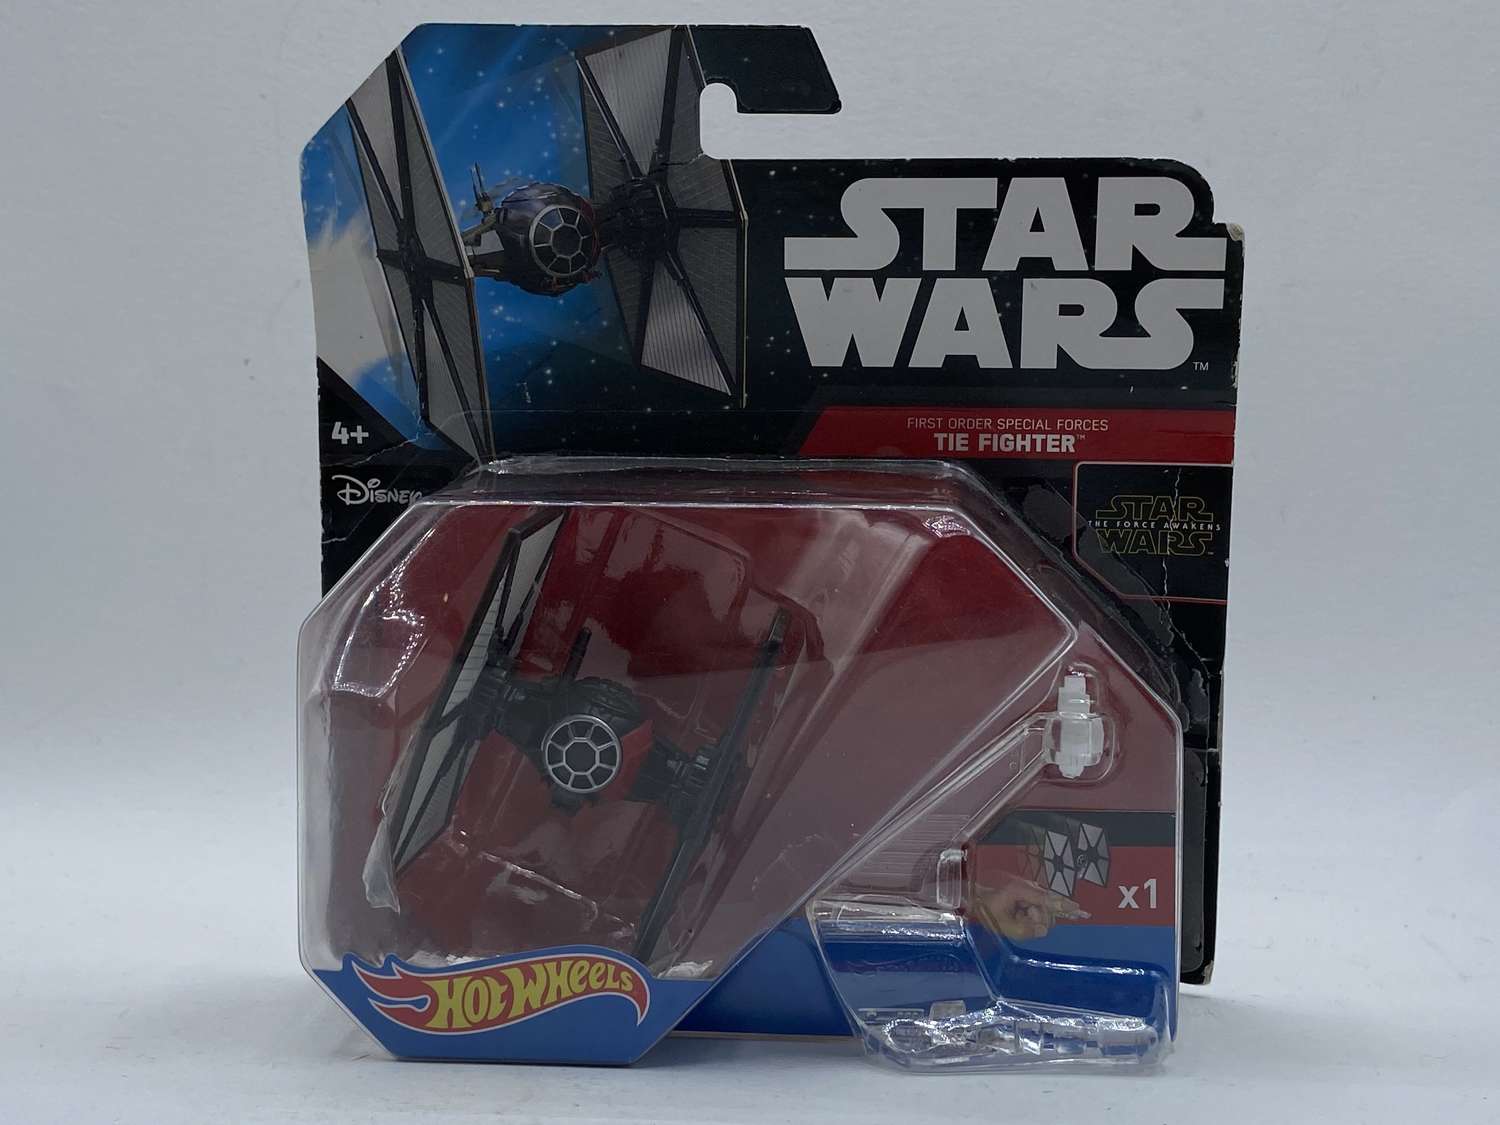 Star Wars Hot Wheels Mattel First Order Special Forces TIE Fighter